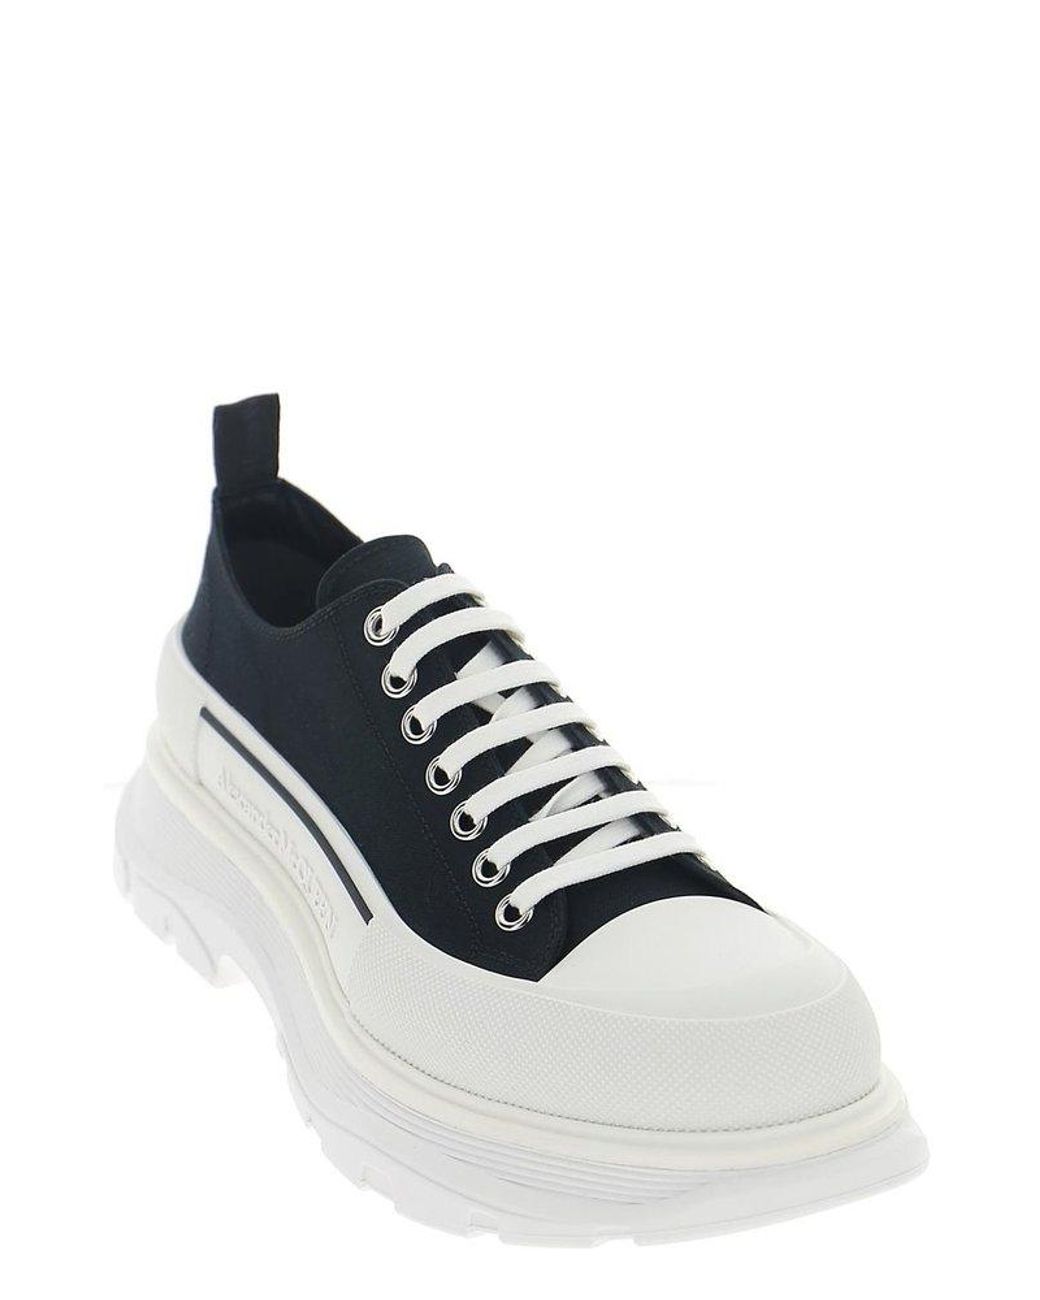 Alexander McQueen Tread Slick Cotton Sneakers in Black & White 